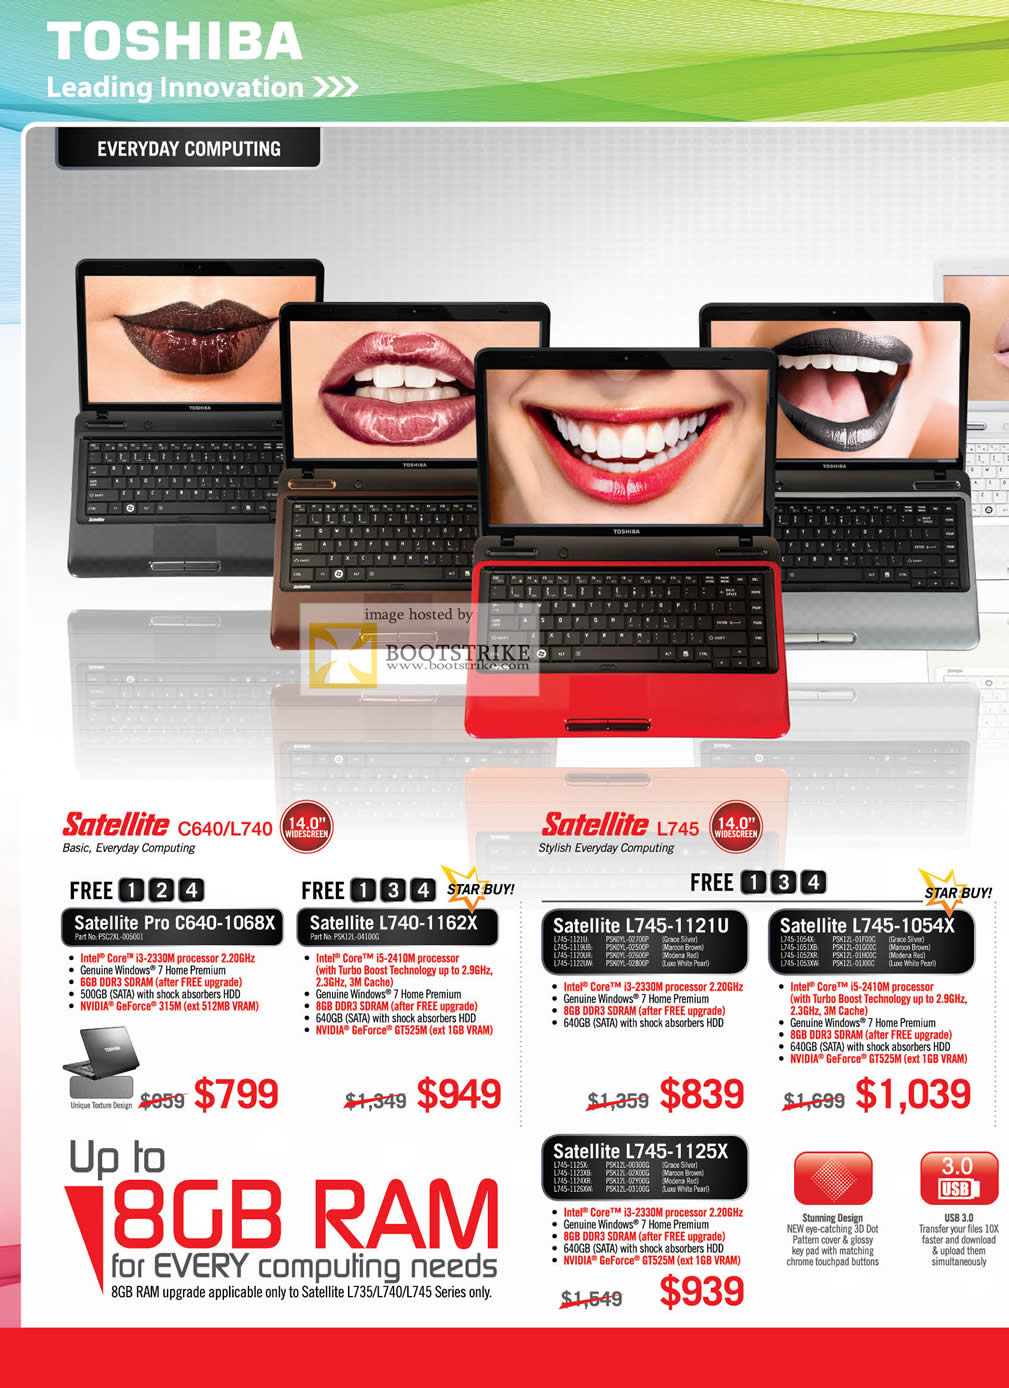 COMEX 2011 price list image brochure of Toshiba Notebooks Satellite C640 1068X L740 1162X L745 1121U 1054X 1125X